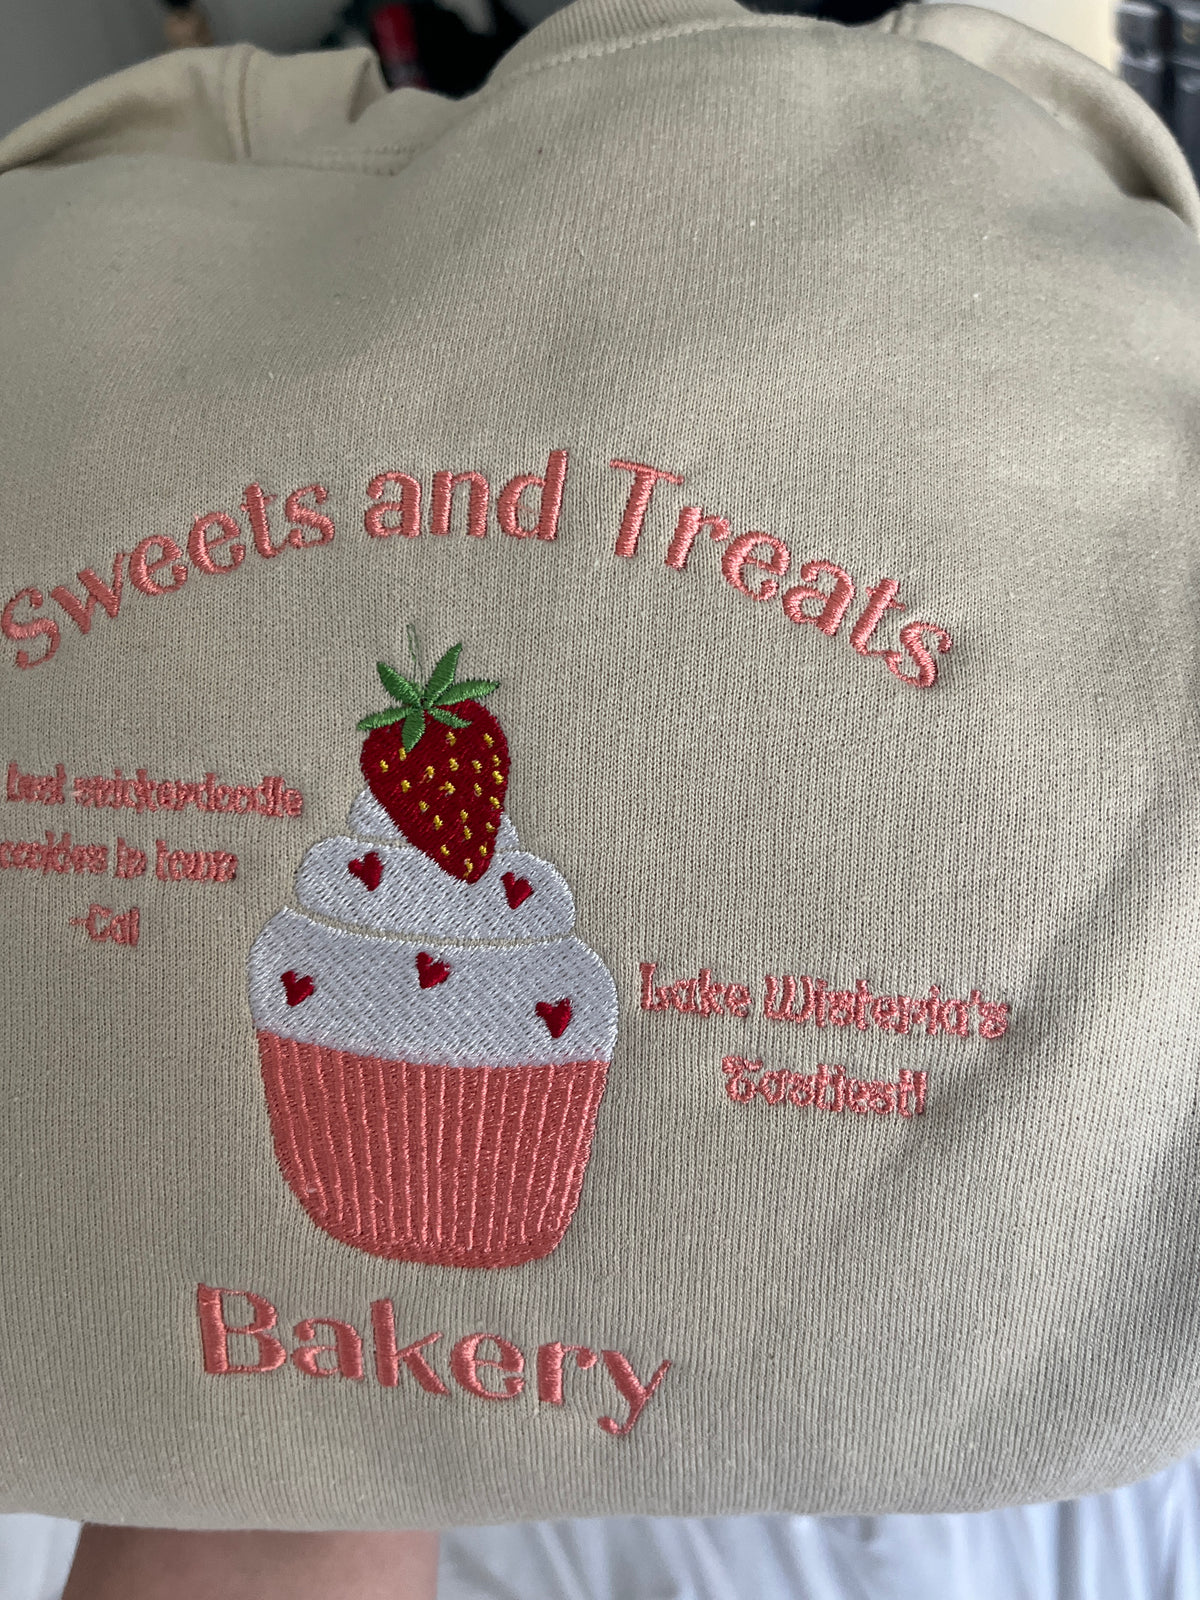 Lana’s Bakery Sweatshirt